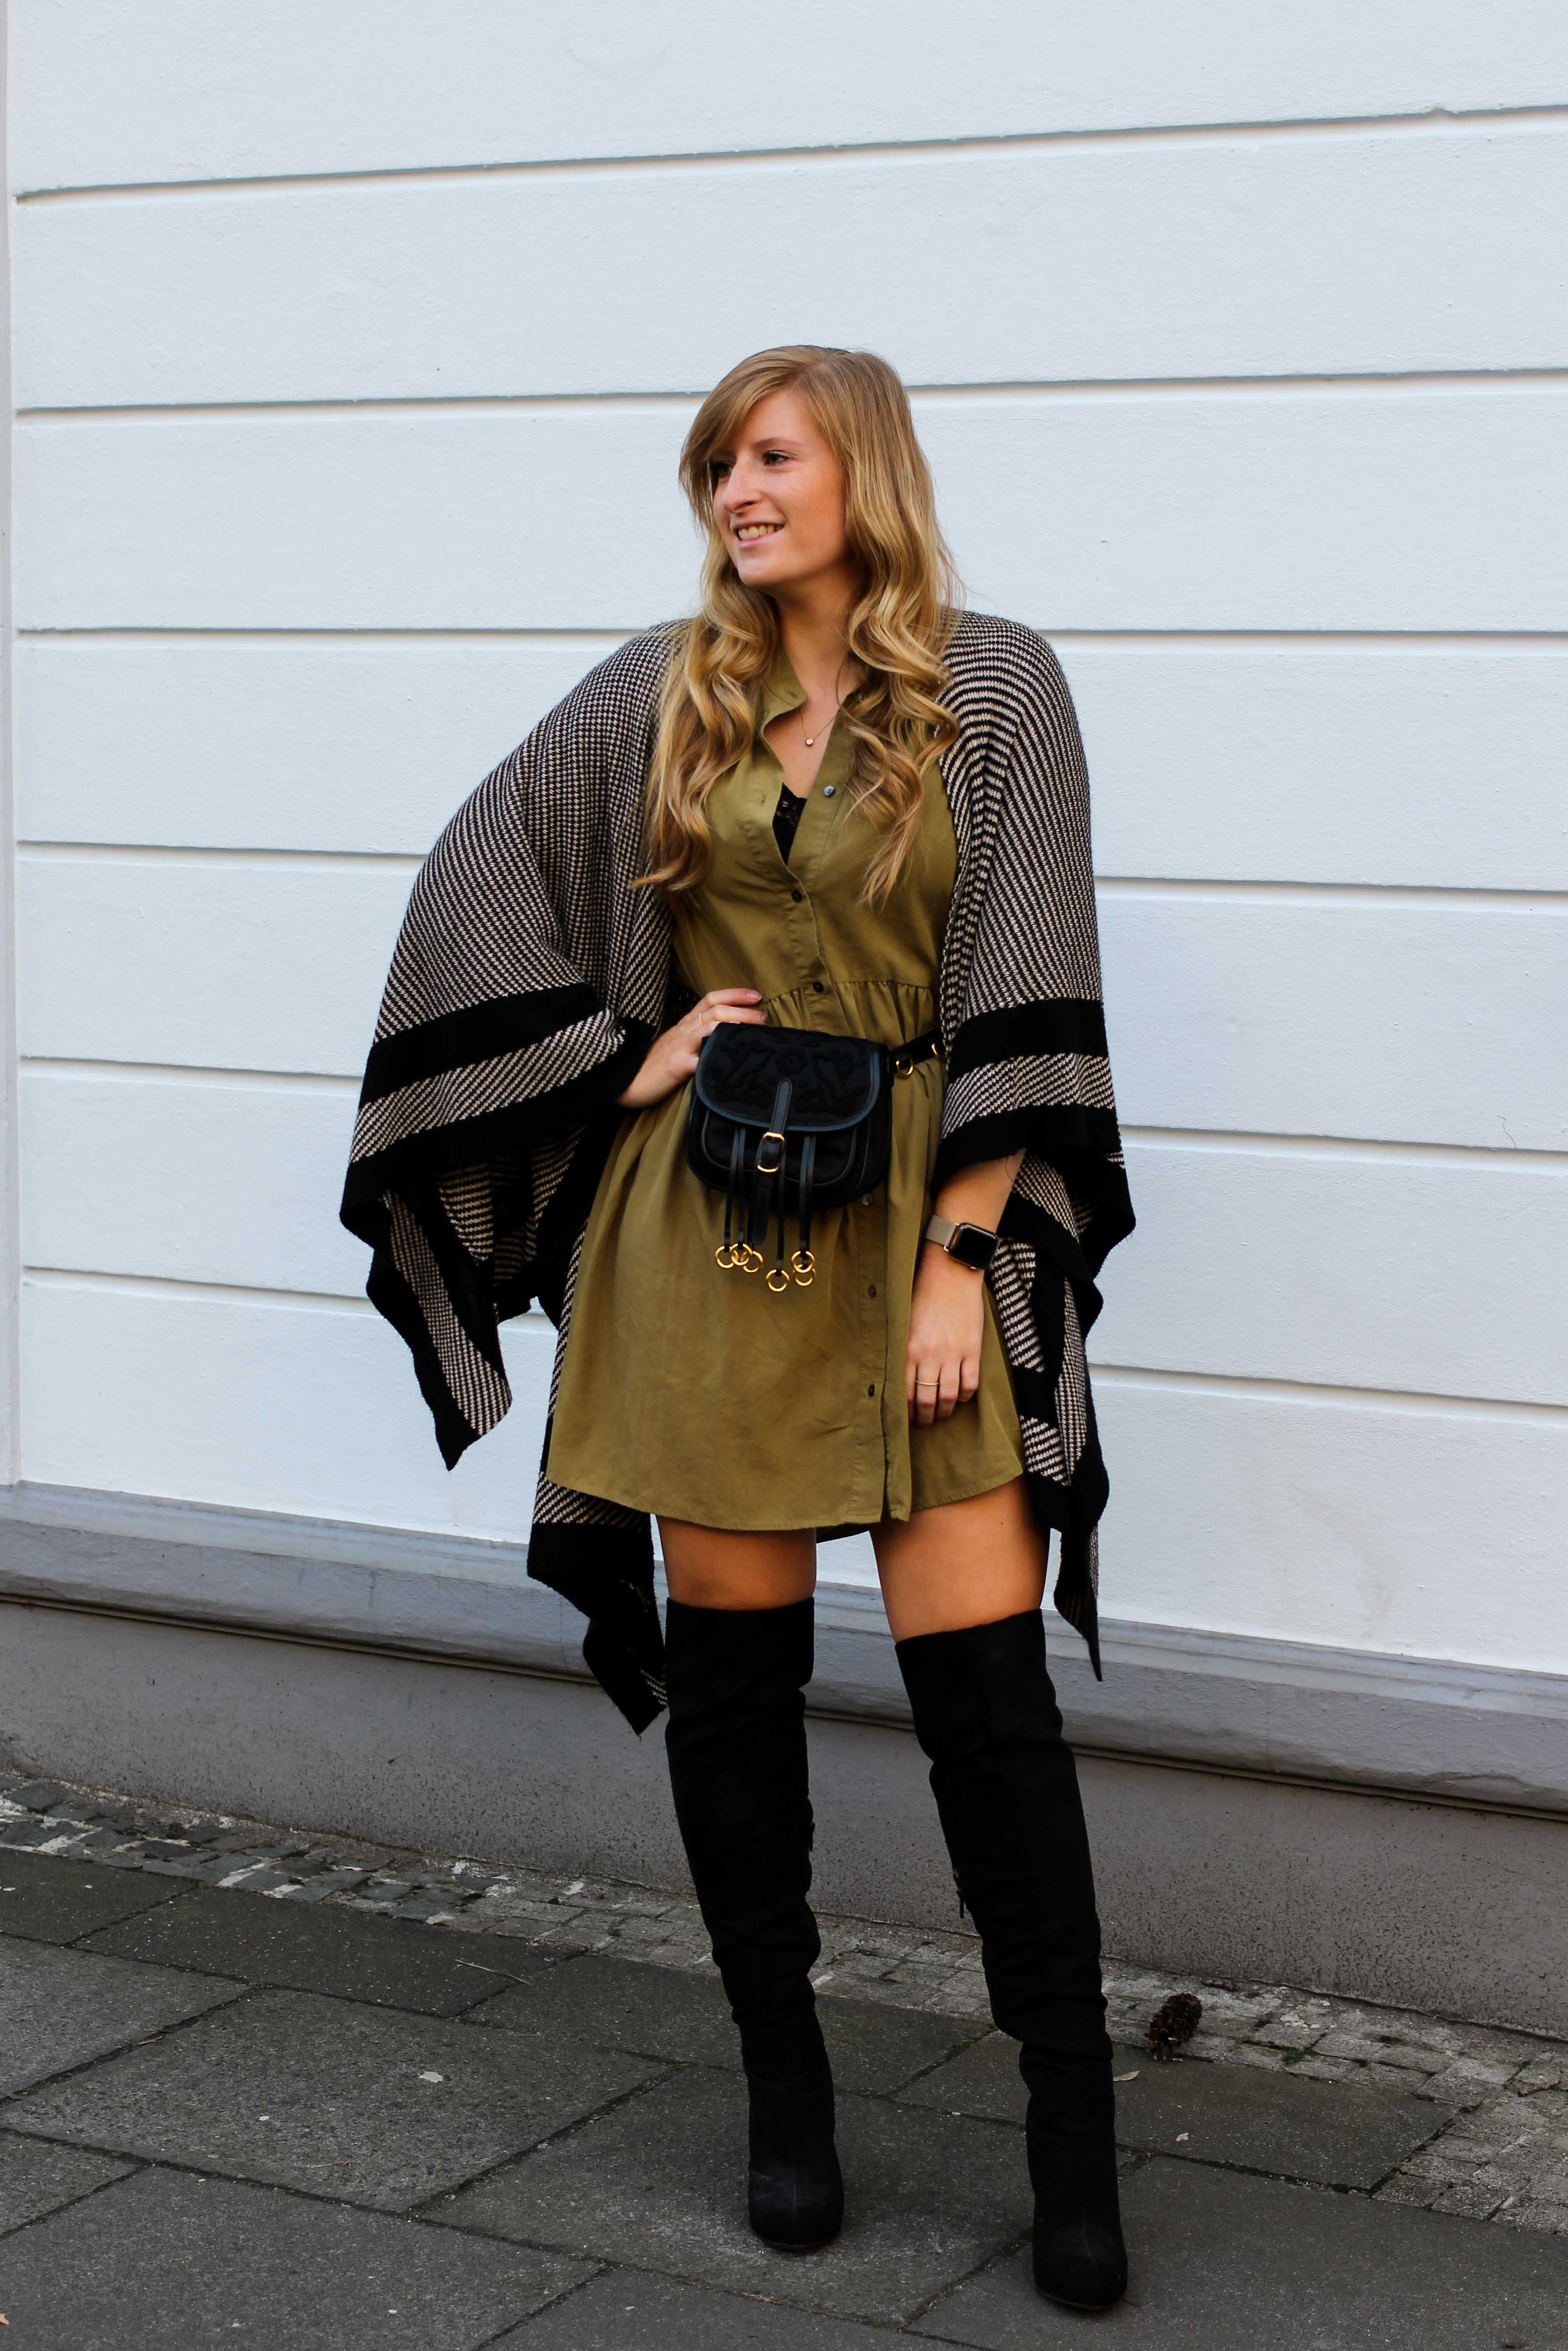 Overknees Gürteltasche Prada Poncho Second-Hand Kleidung kombinieren Streetstyle Outfit Bonn Zara Kleid grün Frühling 2019 1